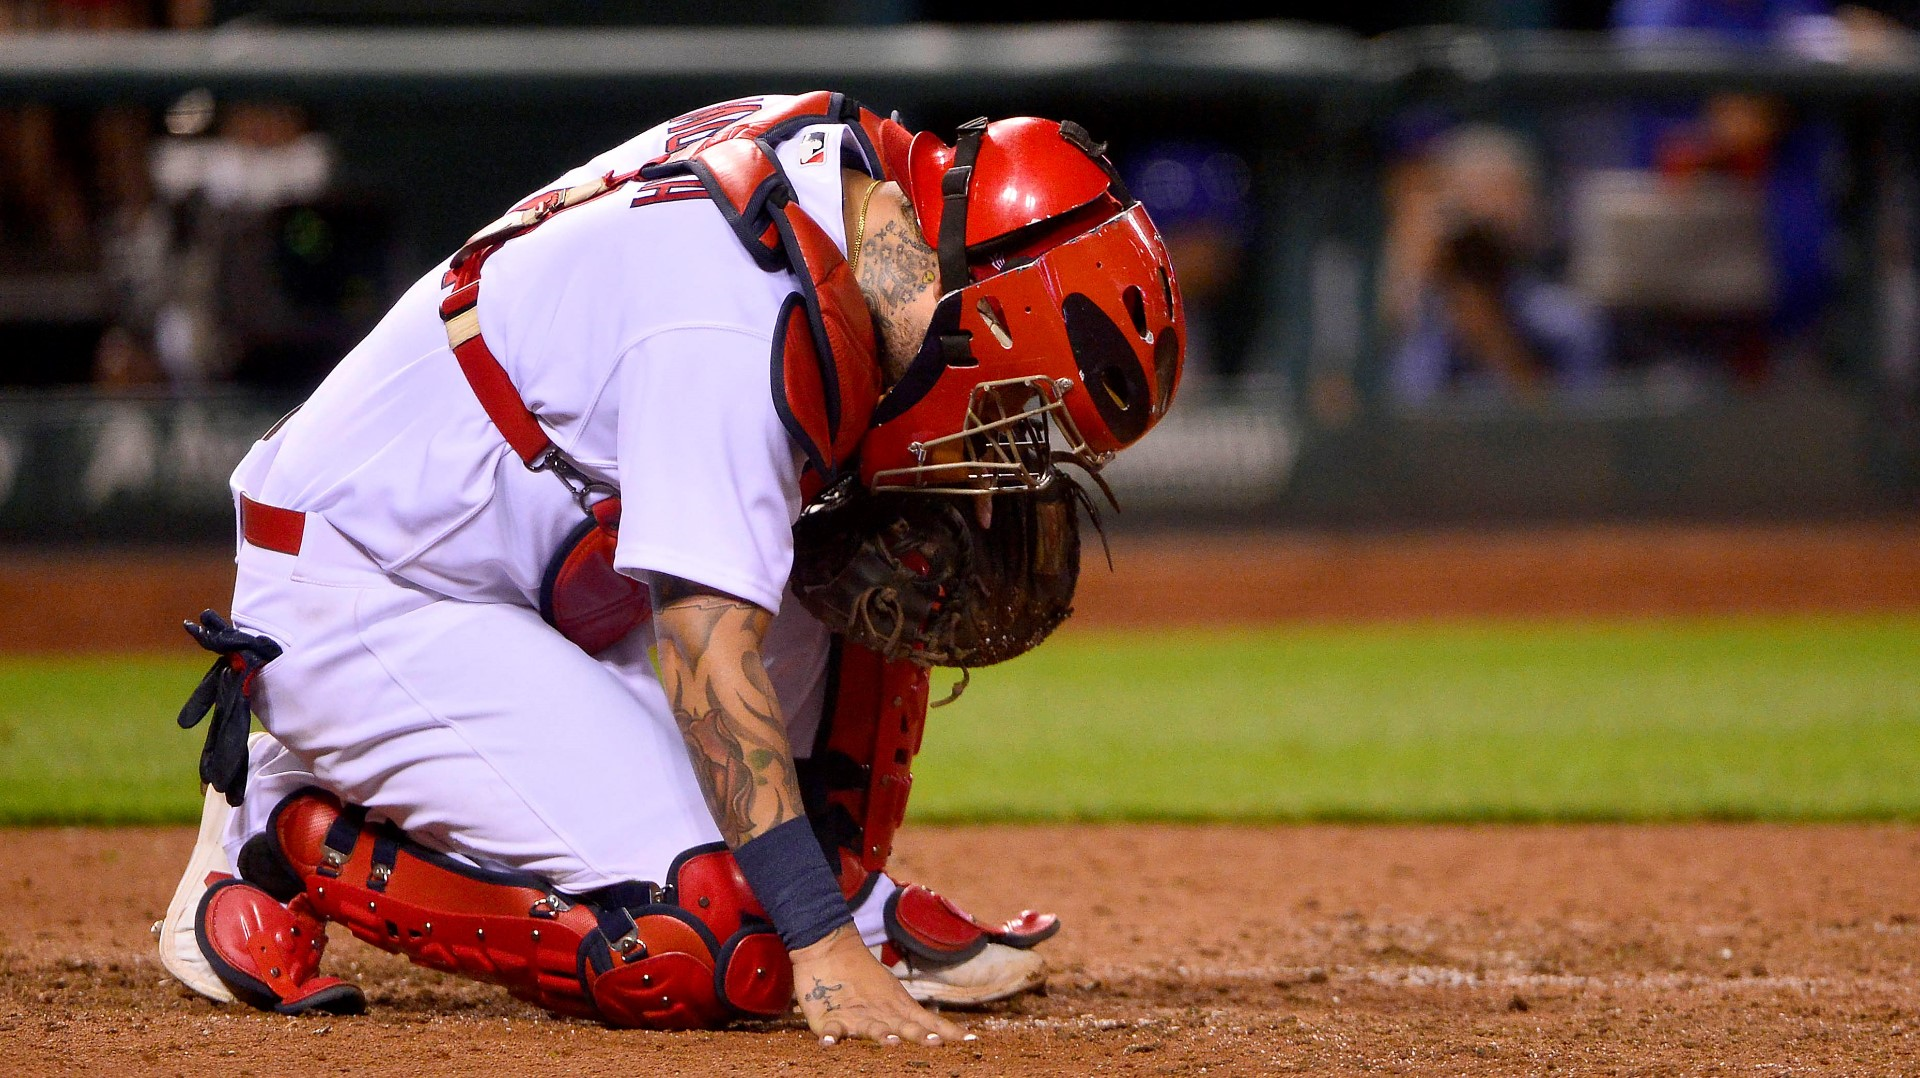 Molina undergoing MLB concussion protocol